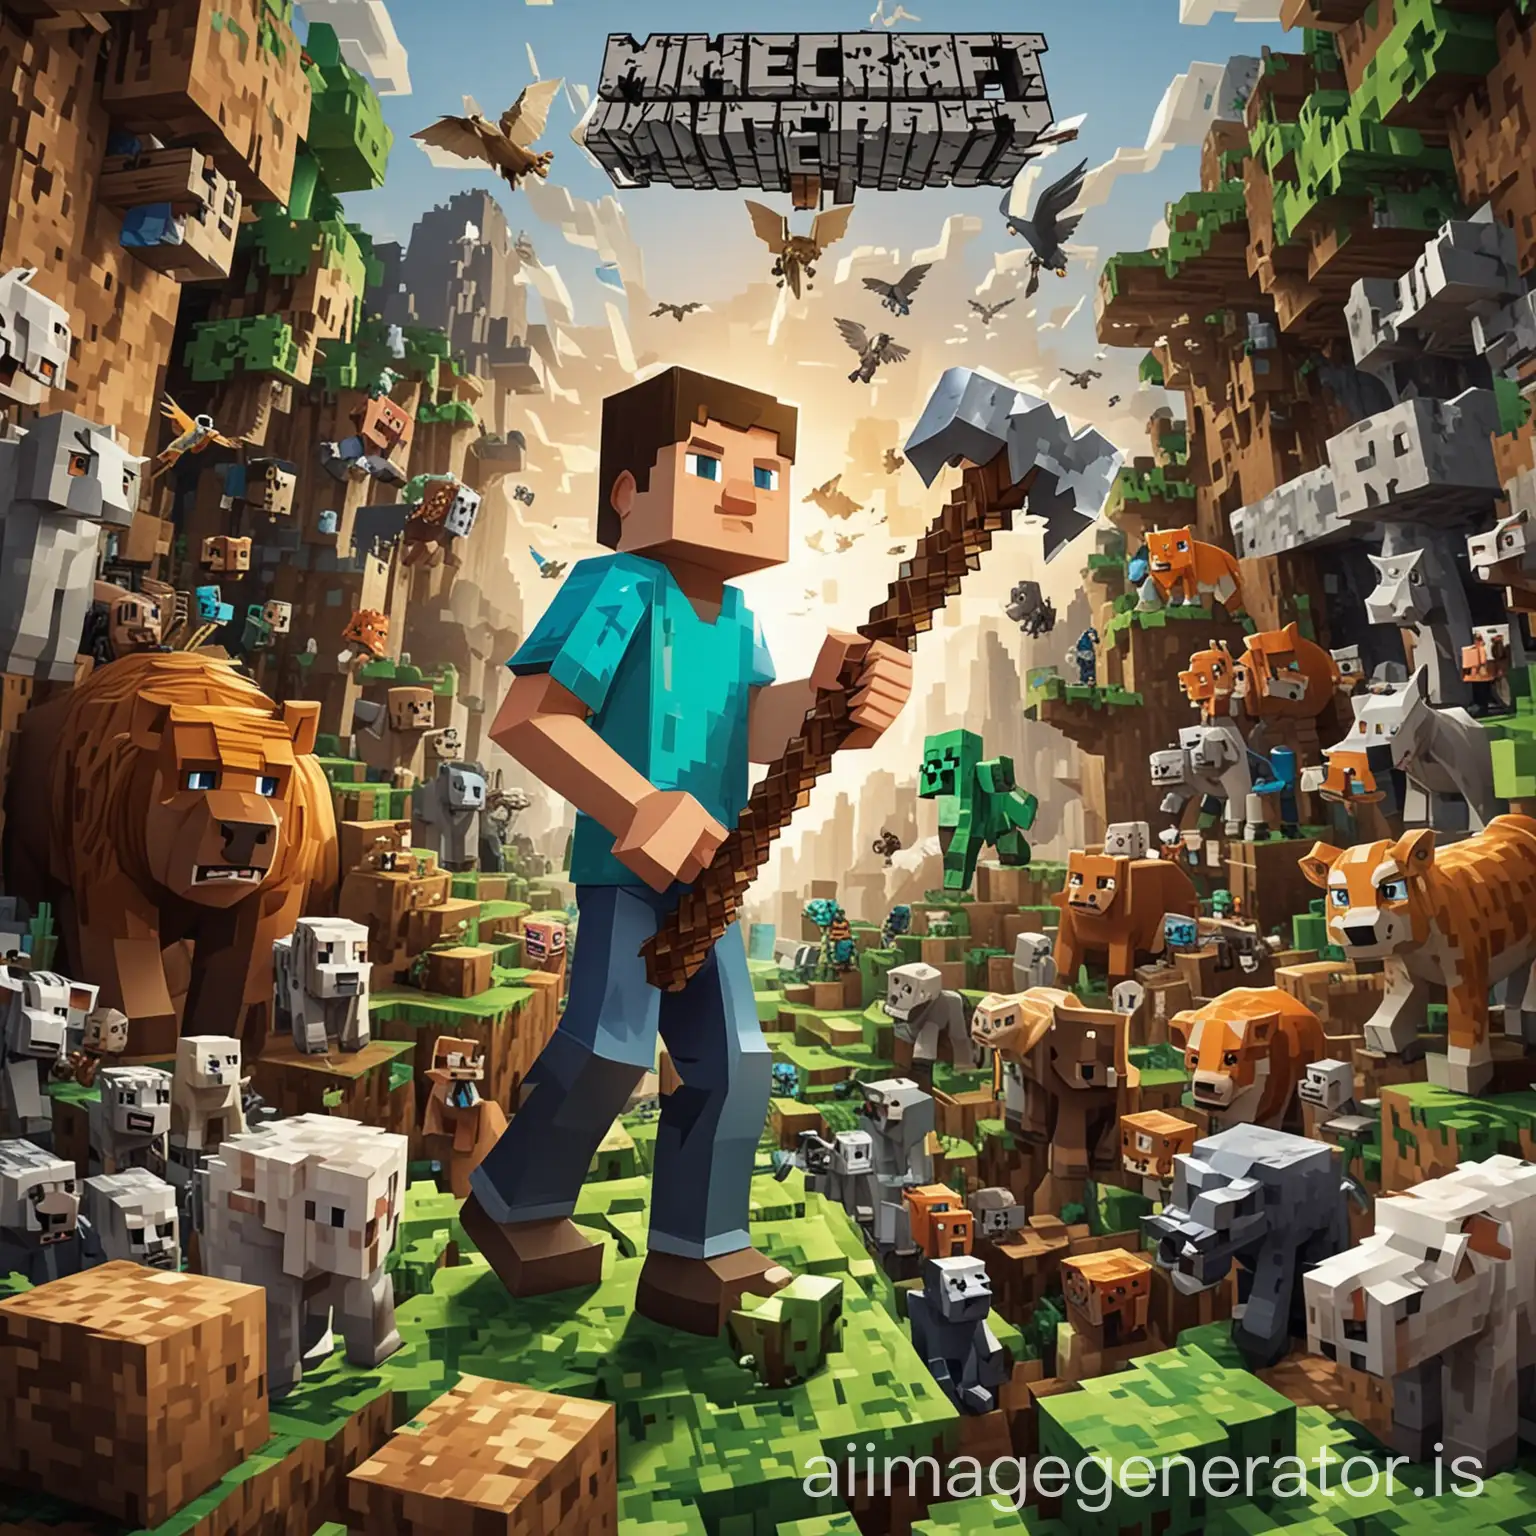 Adventurous-Boy-with-Minecraft-Pickaxe-Explores-Vibrant-Minecraft-World